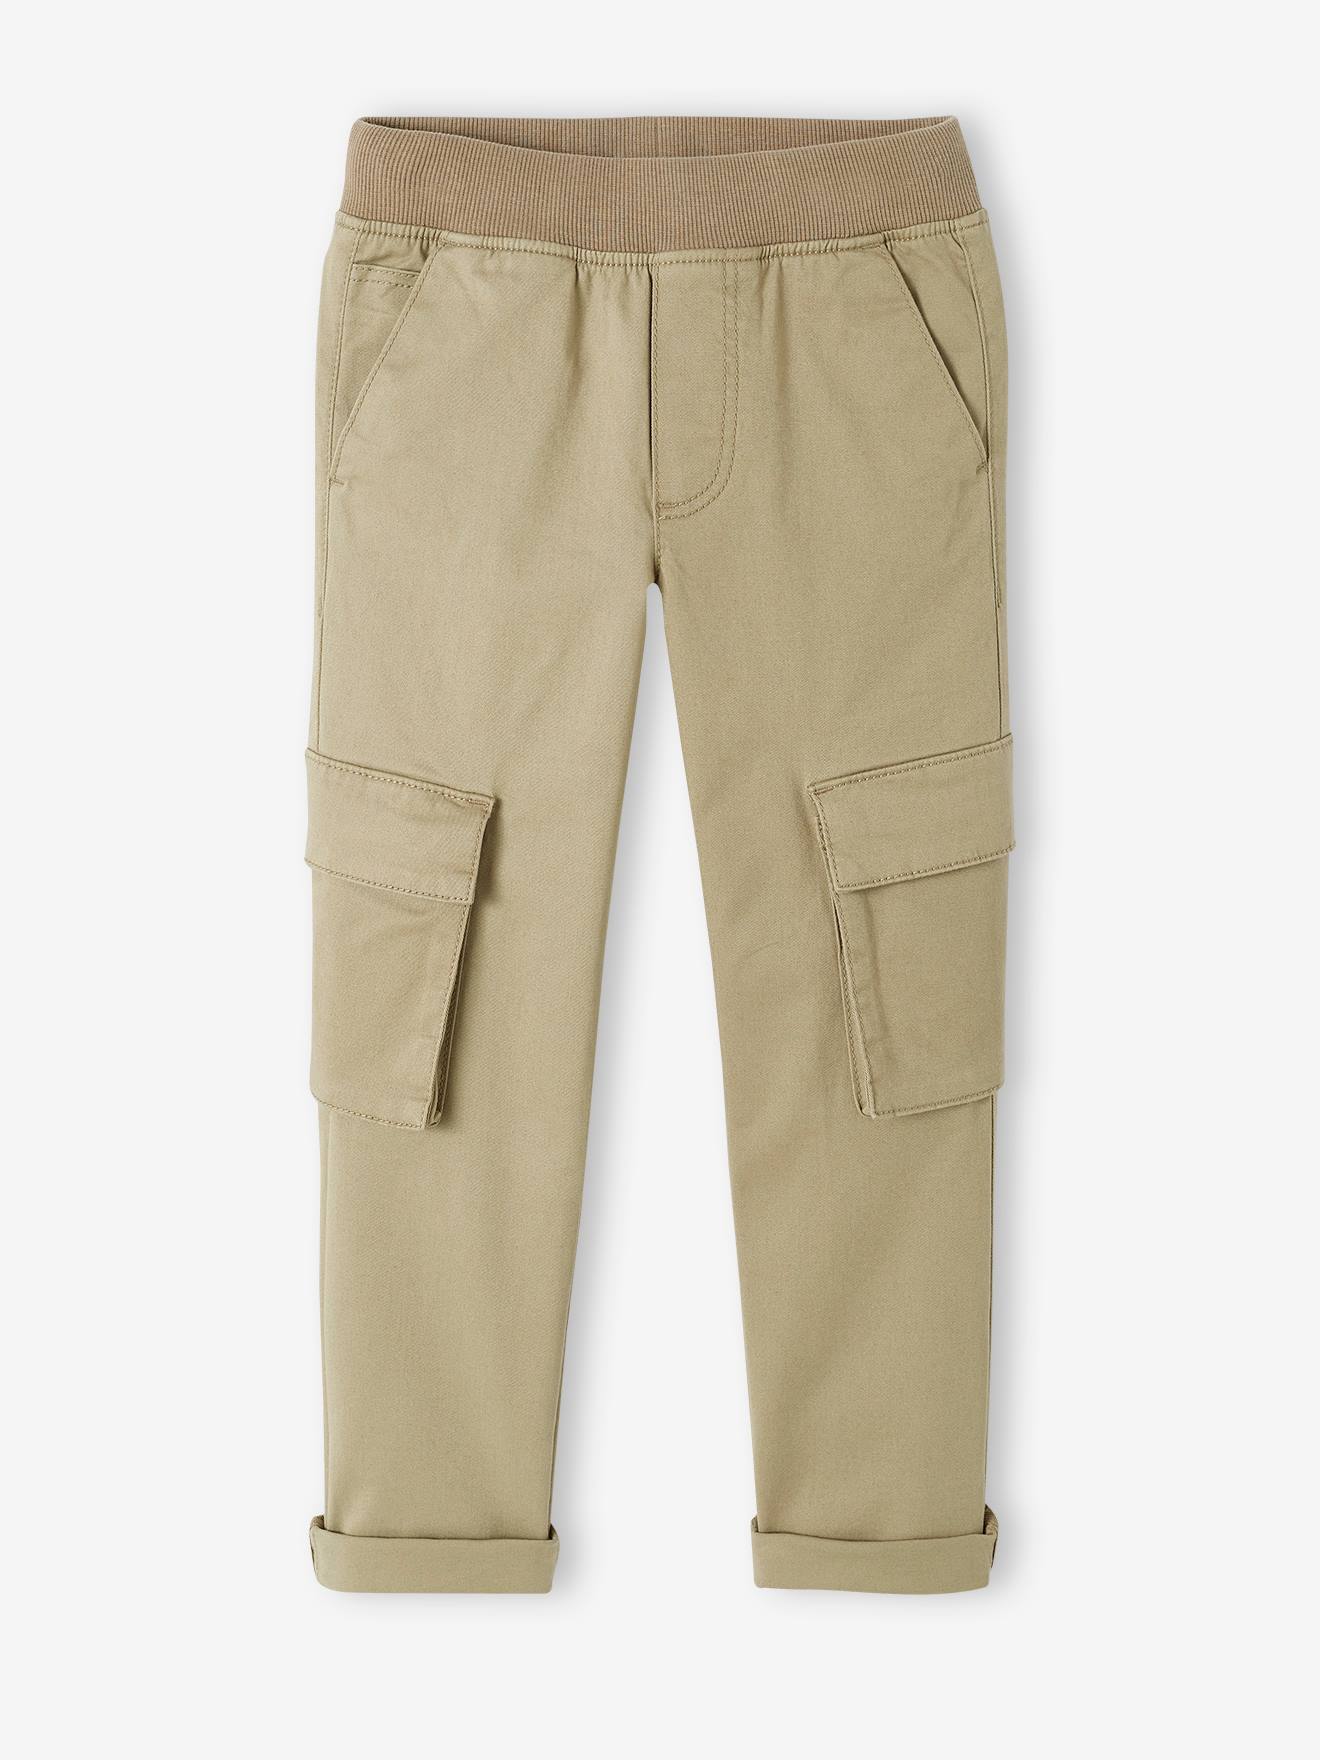 pantalon cargo droit morphologik facile à enfiler garçon tour de hanches fin bronze